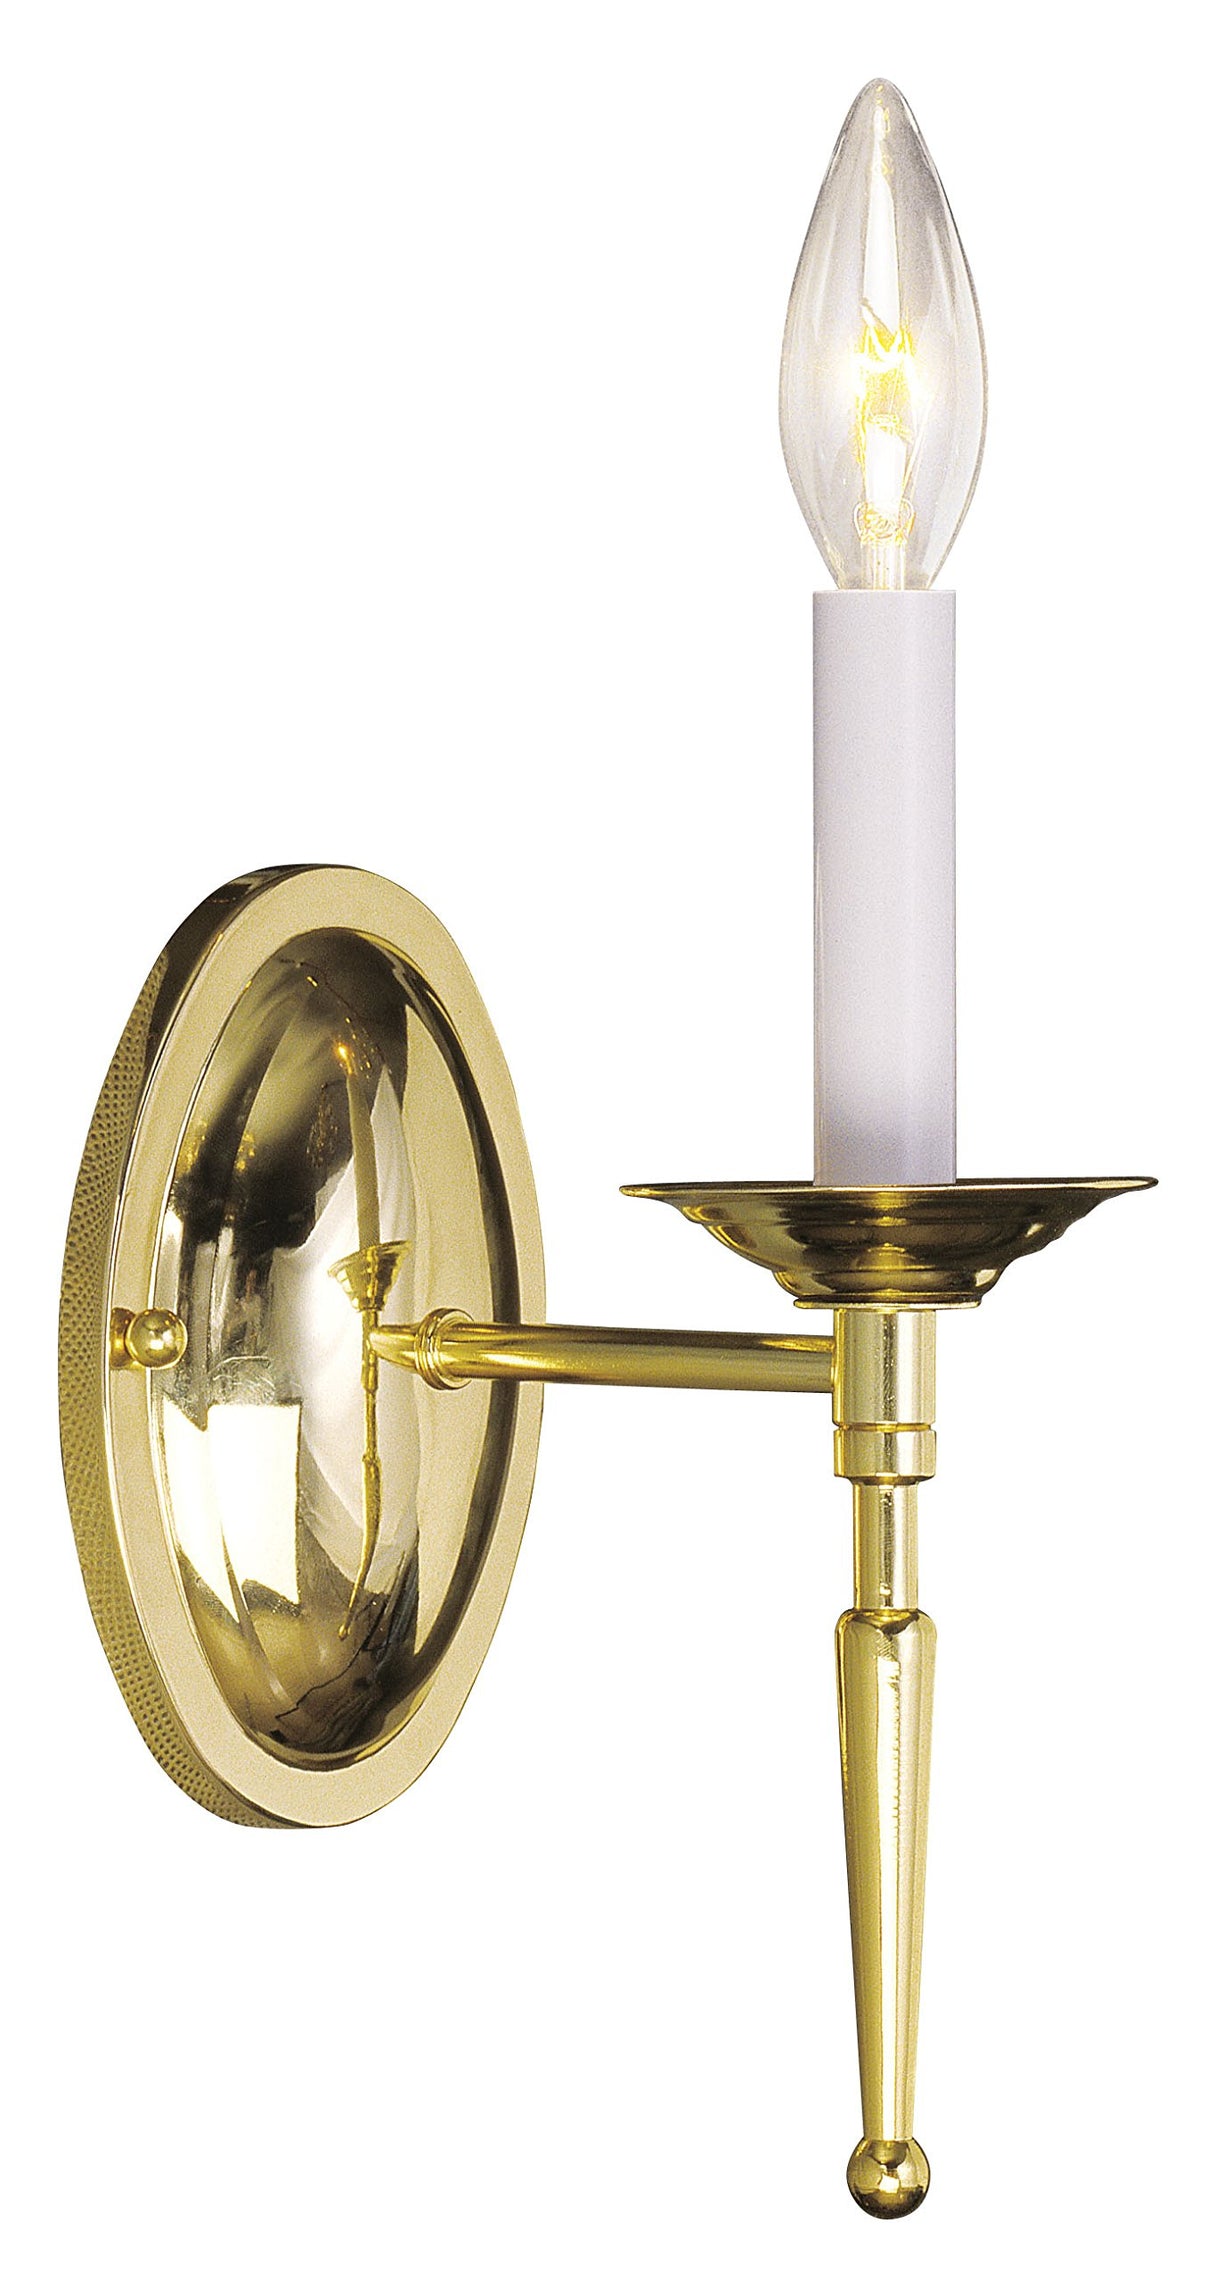 Livex Lighting 5121-02 Williamsburg 1-Light Wall Sconce, Polished Brass